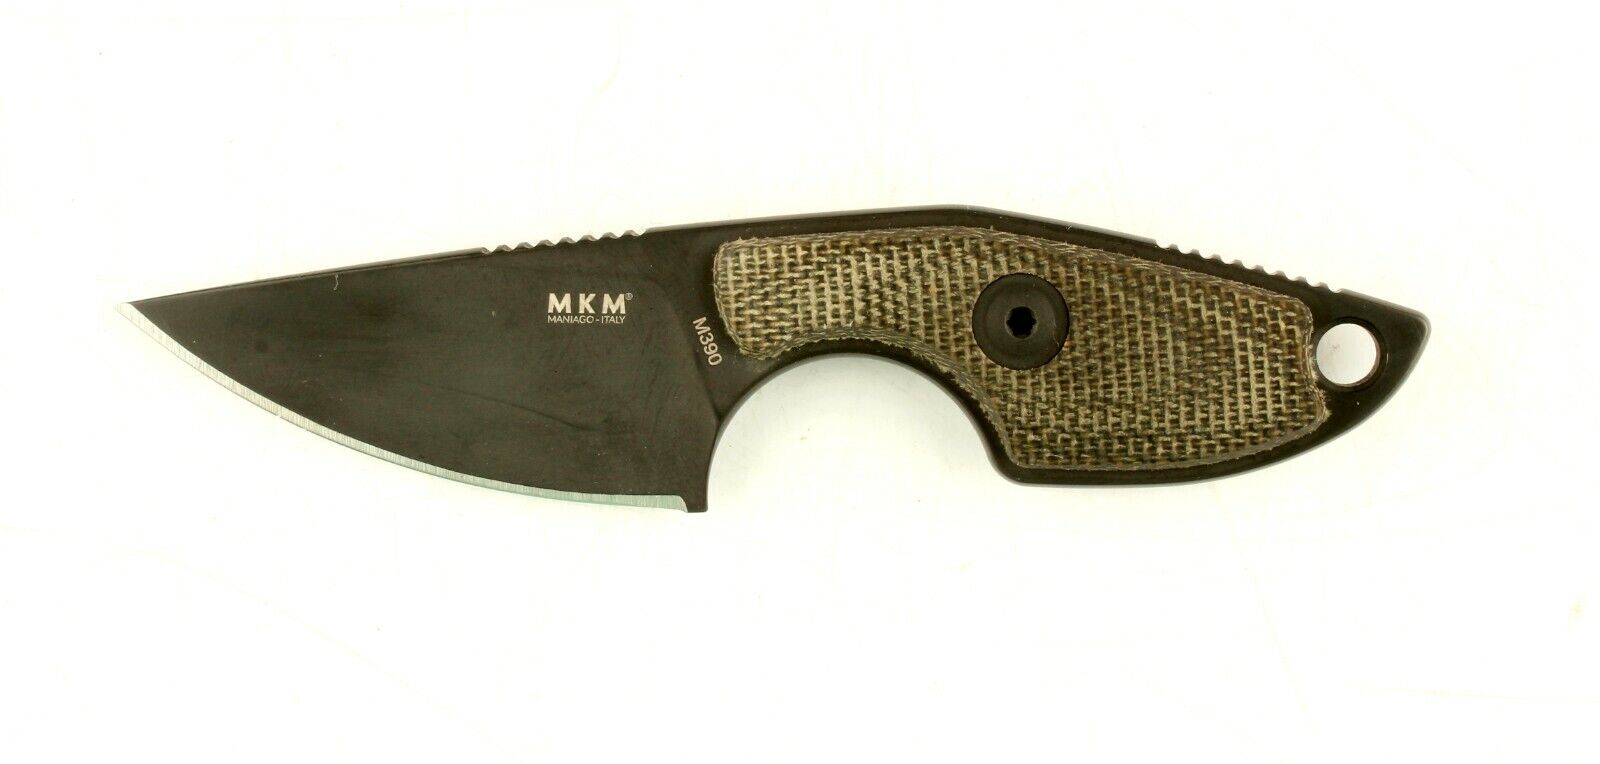 *MKM Voxnaes Mikro M390 Fixed Blade Knife Black 